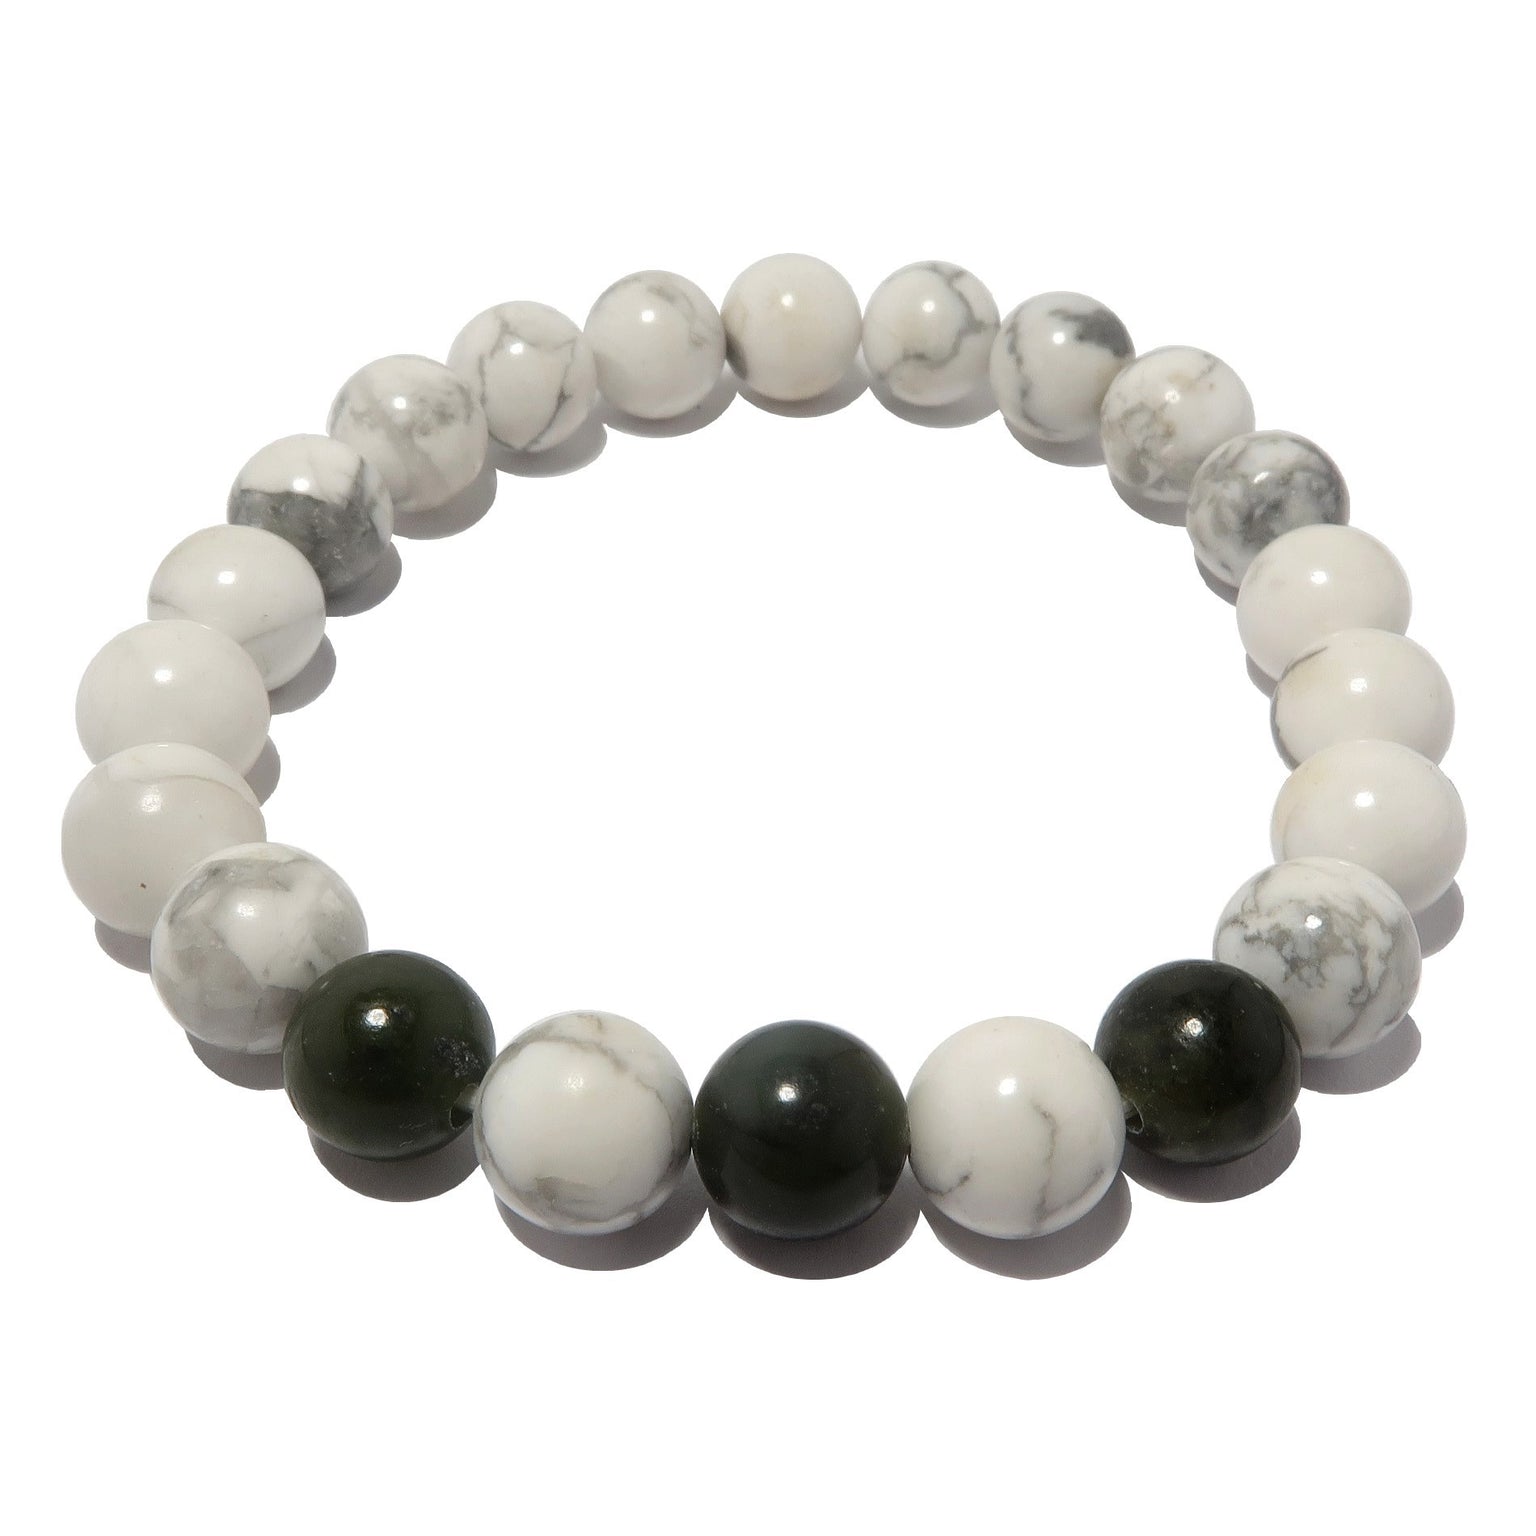 Jade Crystals- Let's Shop Real Jade Jewelry & Stones I Satin Crystals